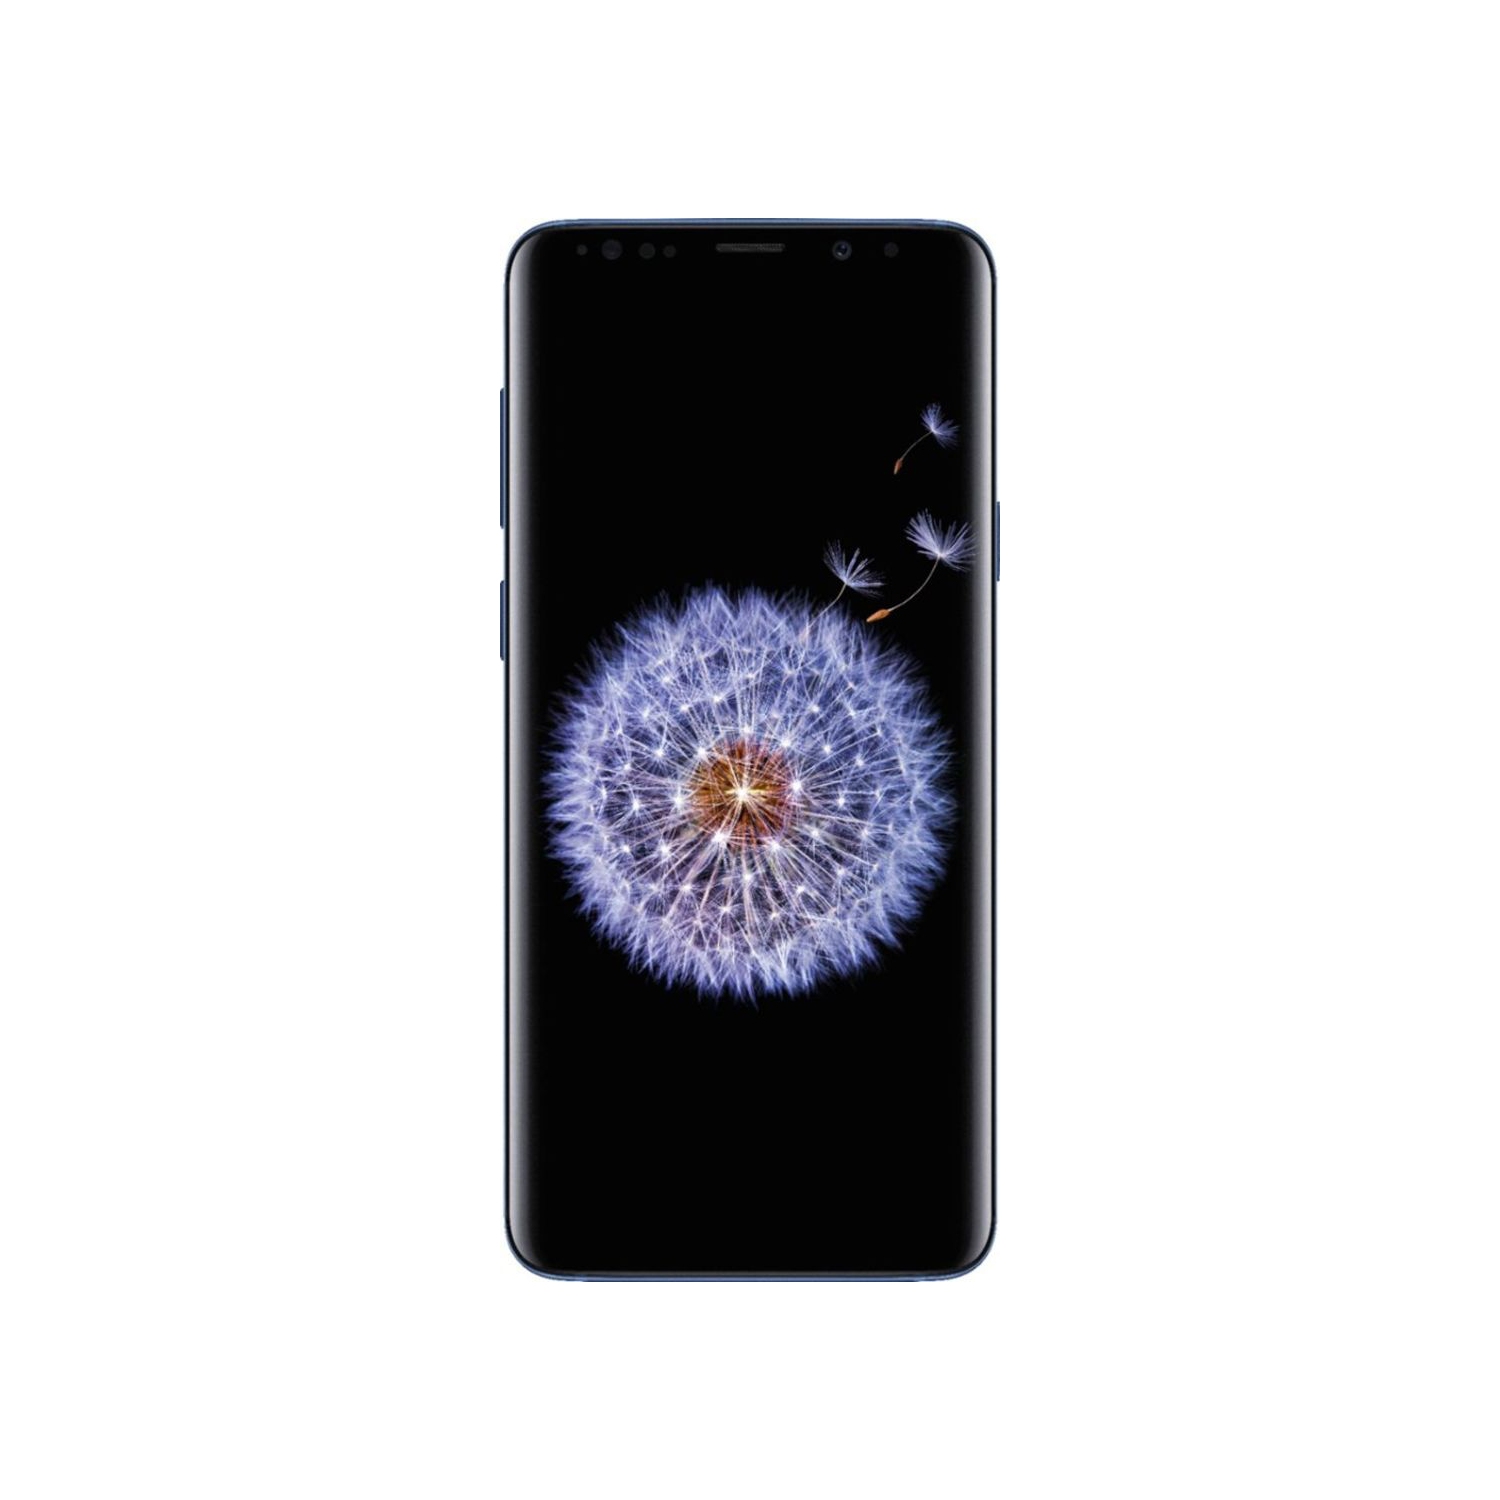 Samsung Galaxy S9+ 64GB Smartphone - Coral Blue - Unlocked - Open Box